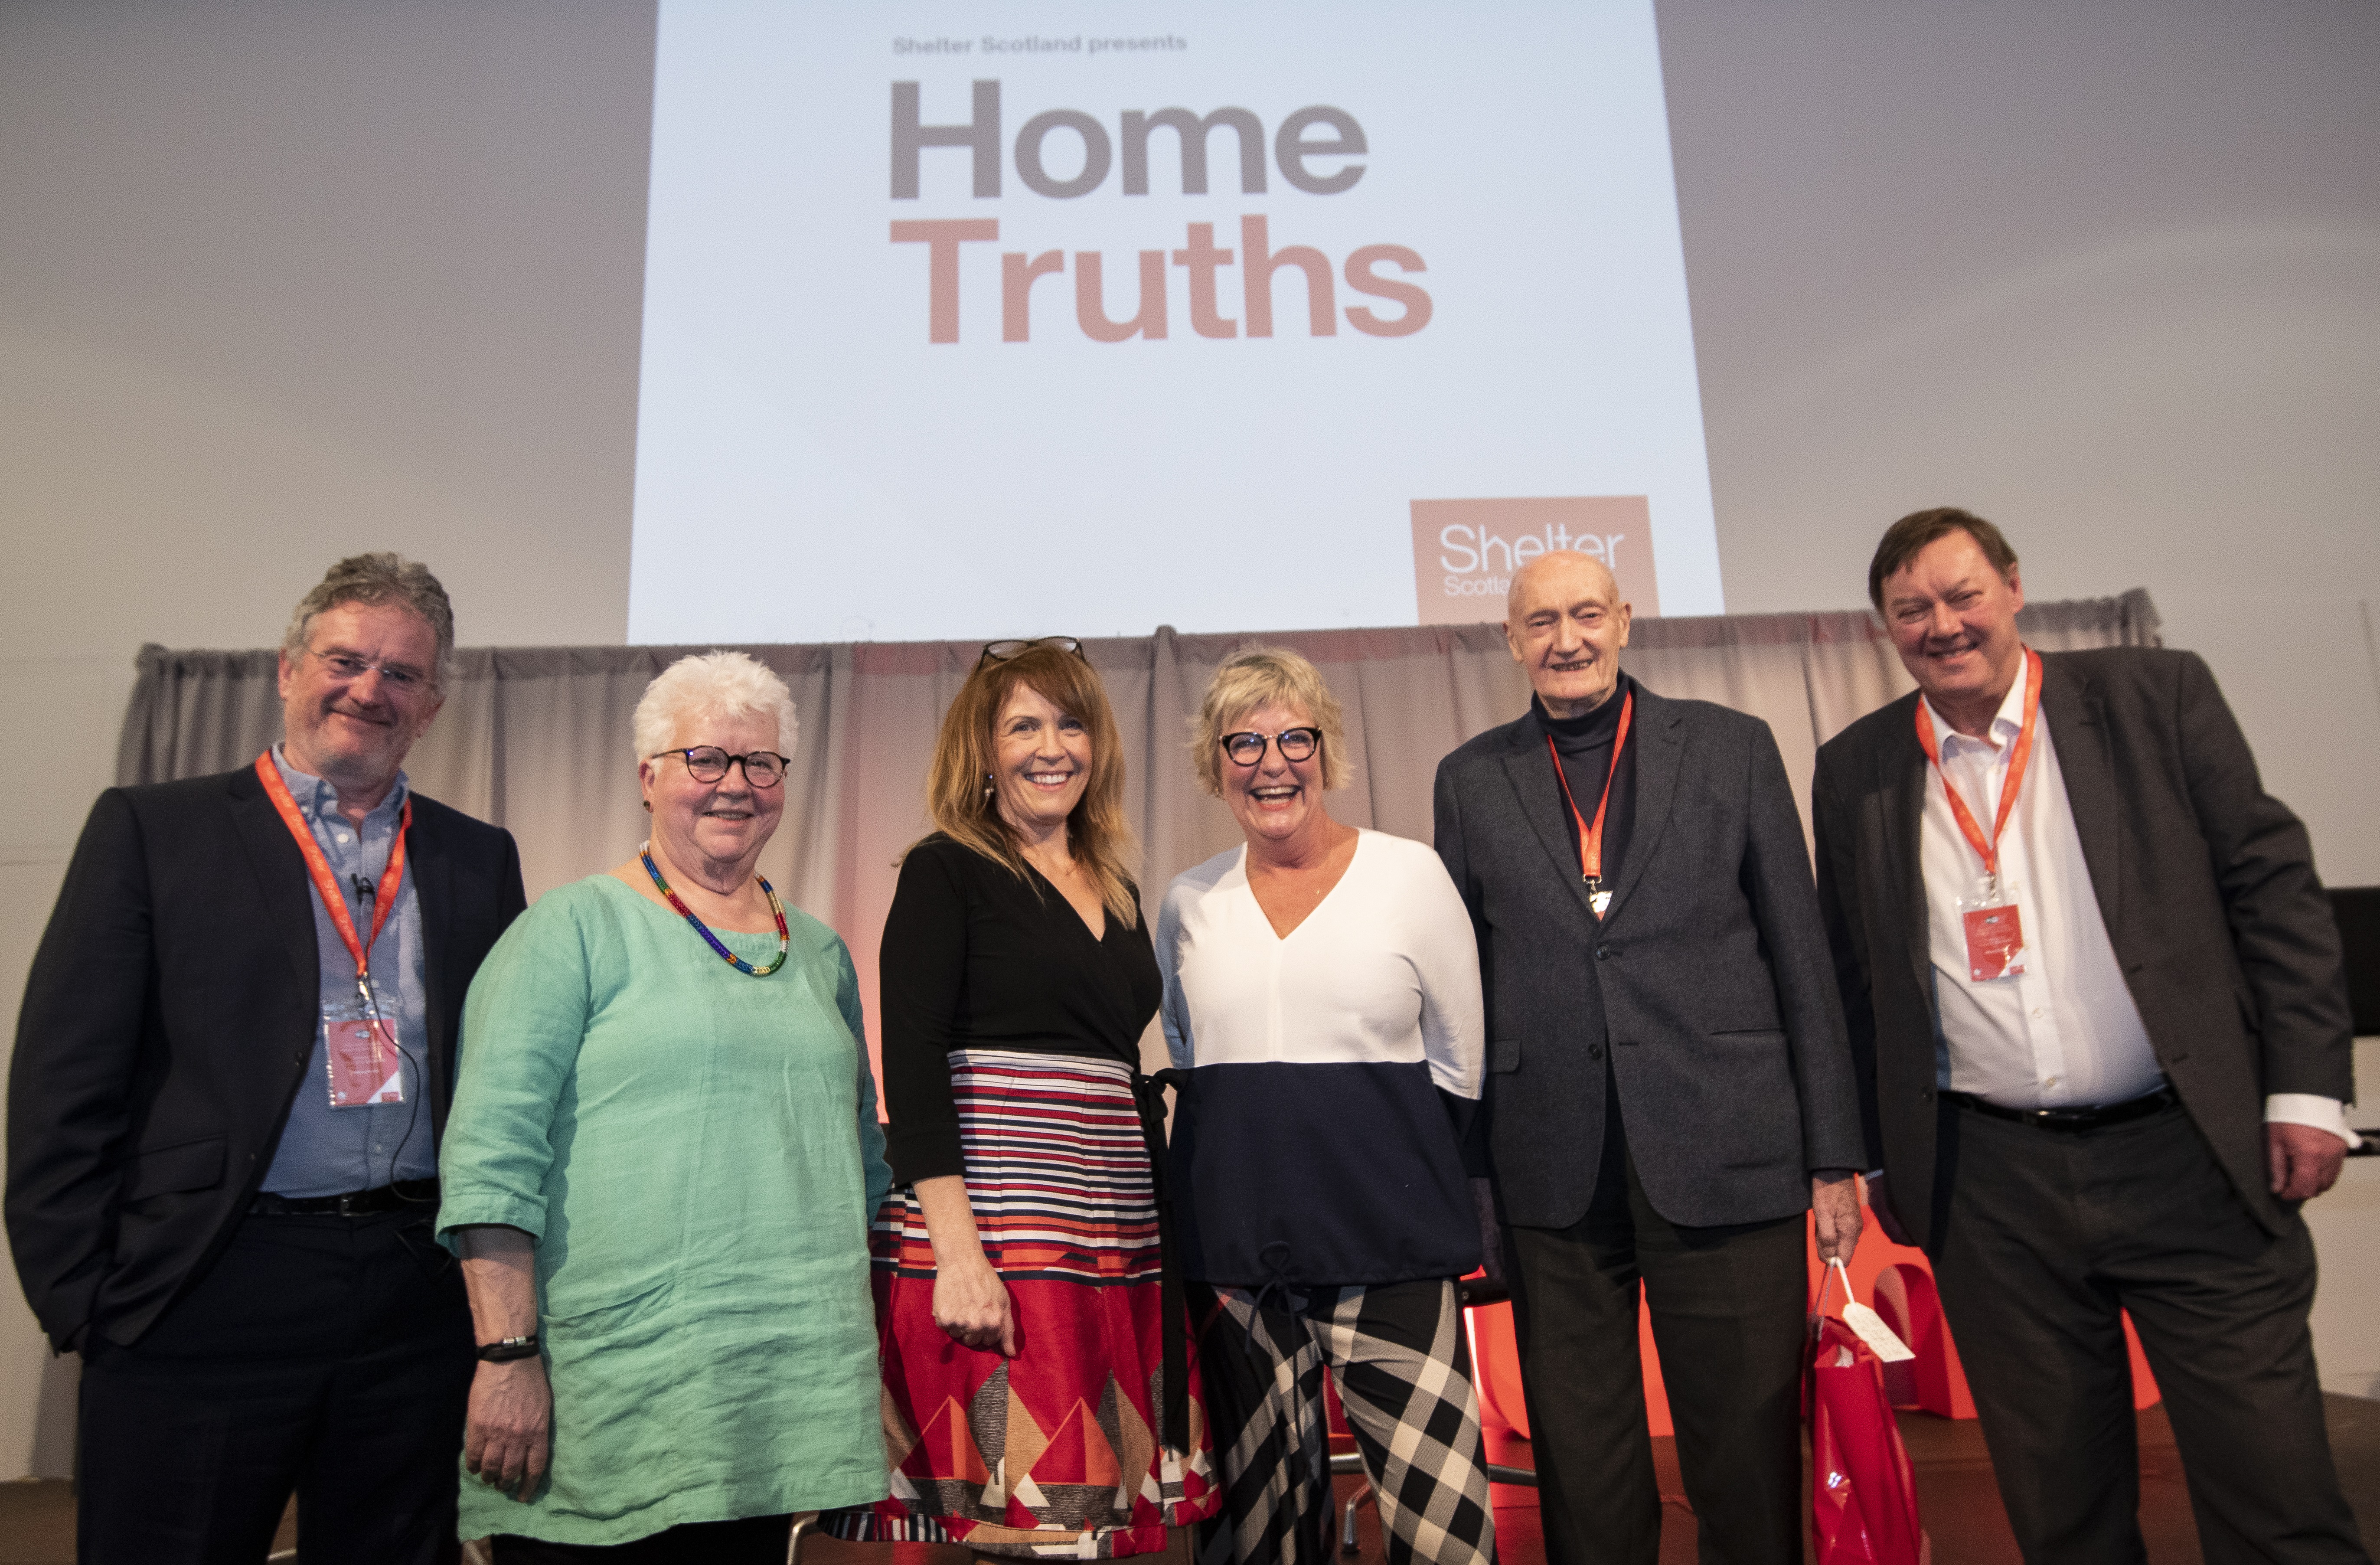 Blog: Val McDermid, Karyn McCluskey and Professor Alan Miller speak at Shelter Scotland’s Home Truths event